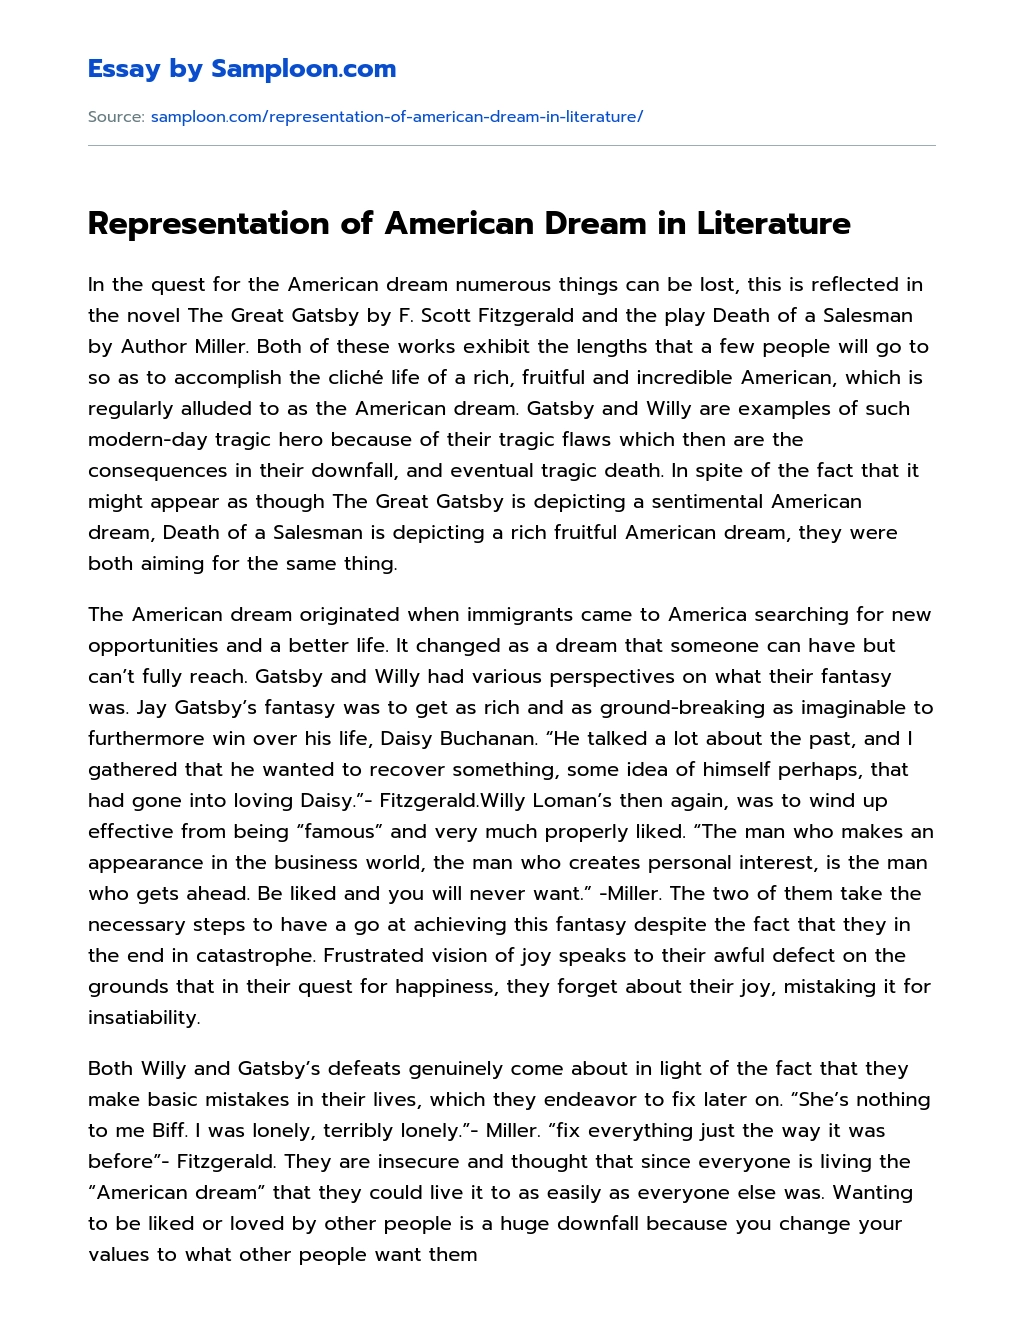 Representation of American Dream in Literature essay